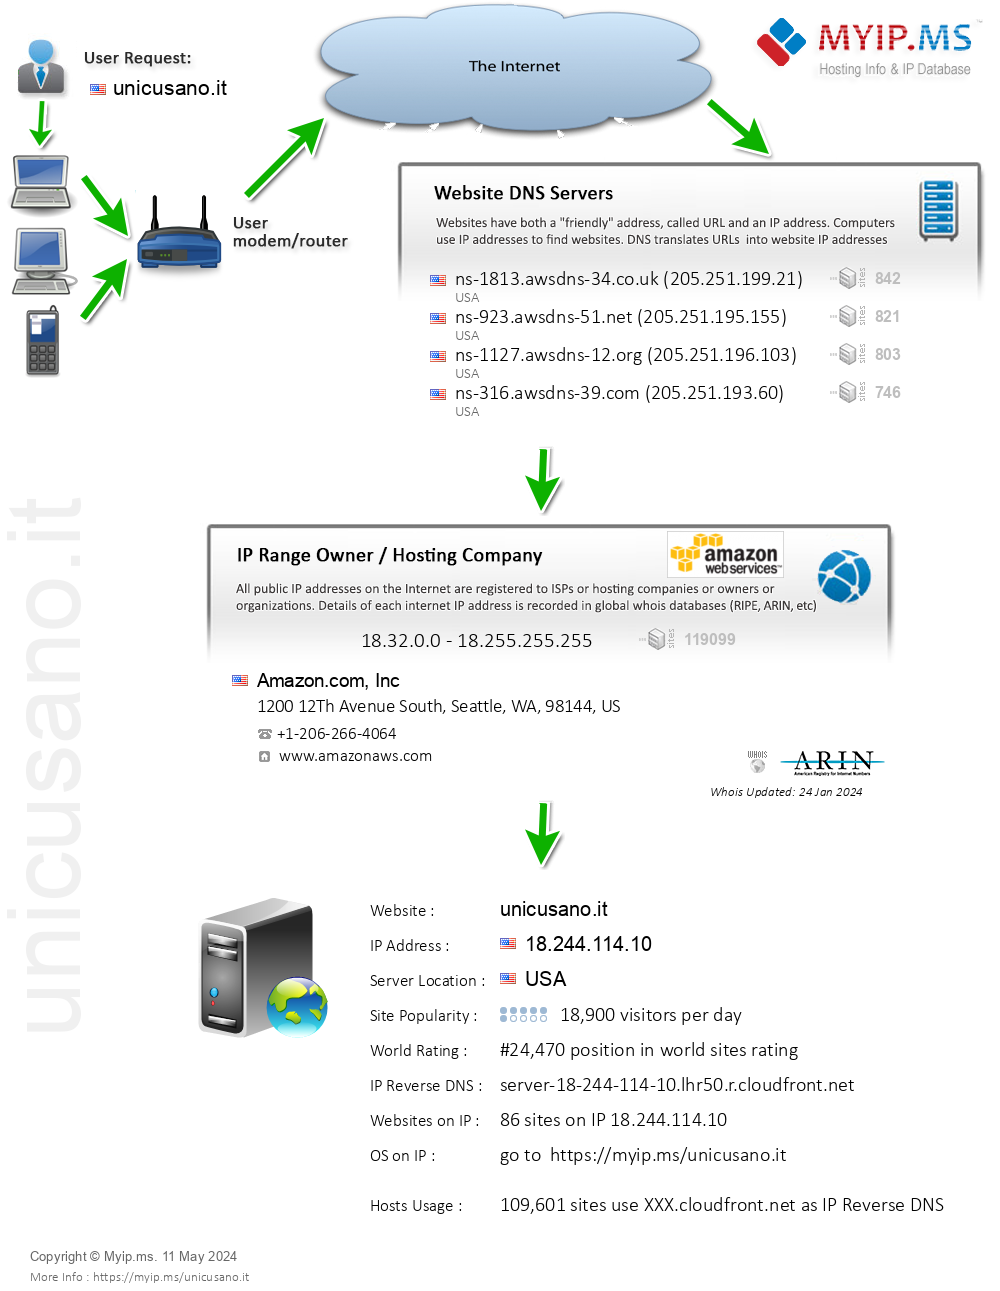 Unicusano.it - Website Hosting Visual IP Diagram